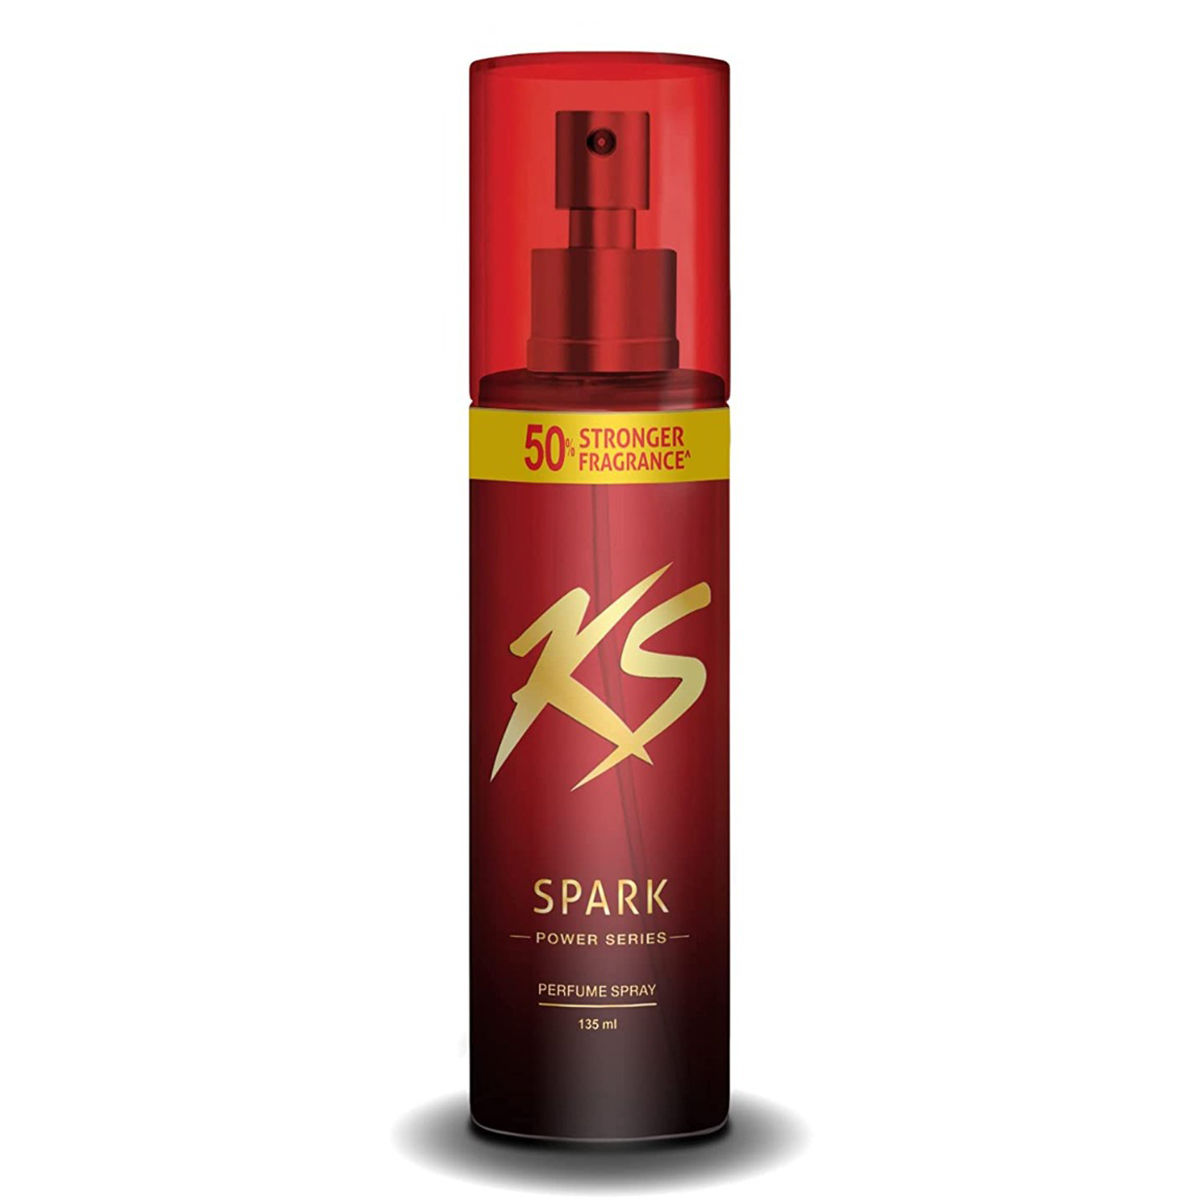 Buy Kamasutra Spark Power Series Perfume Spray, 135 ml Online